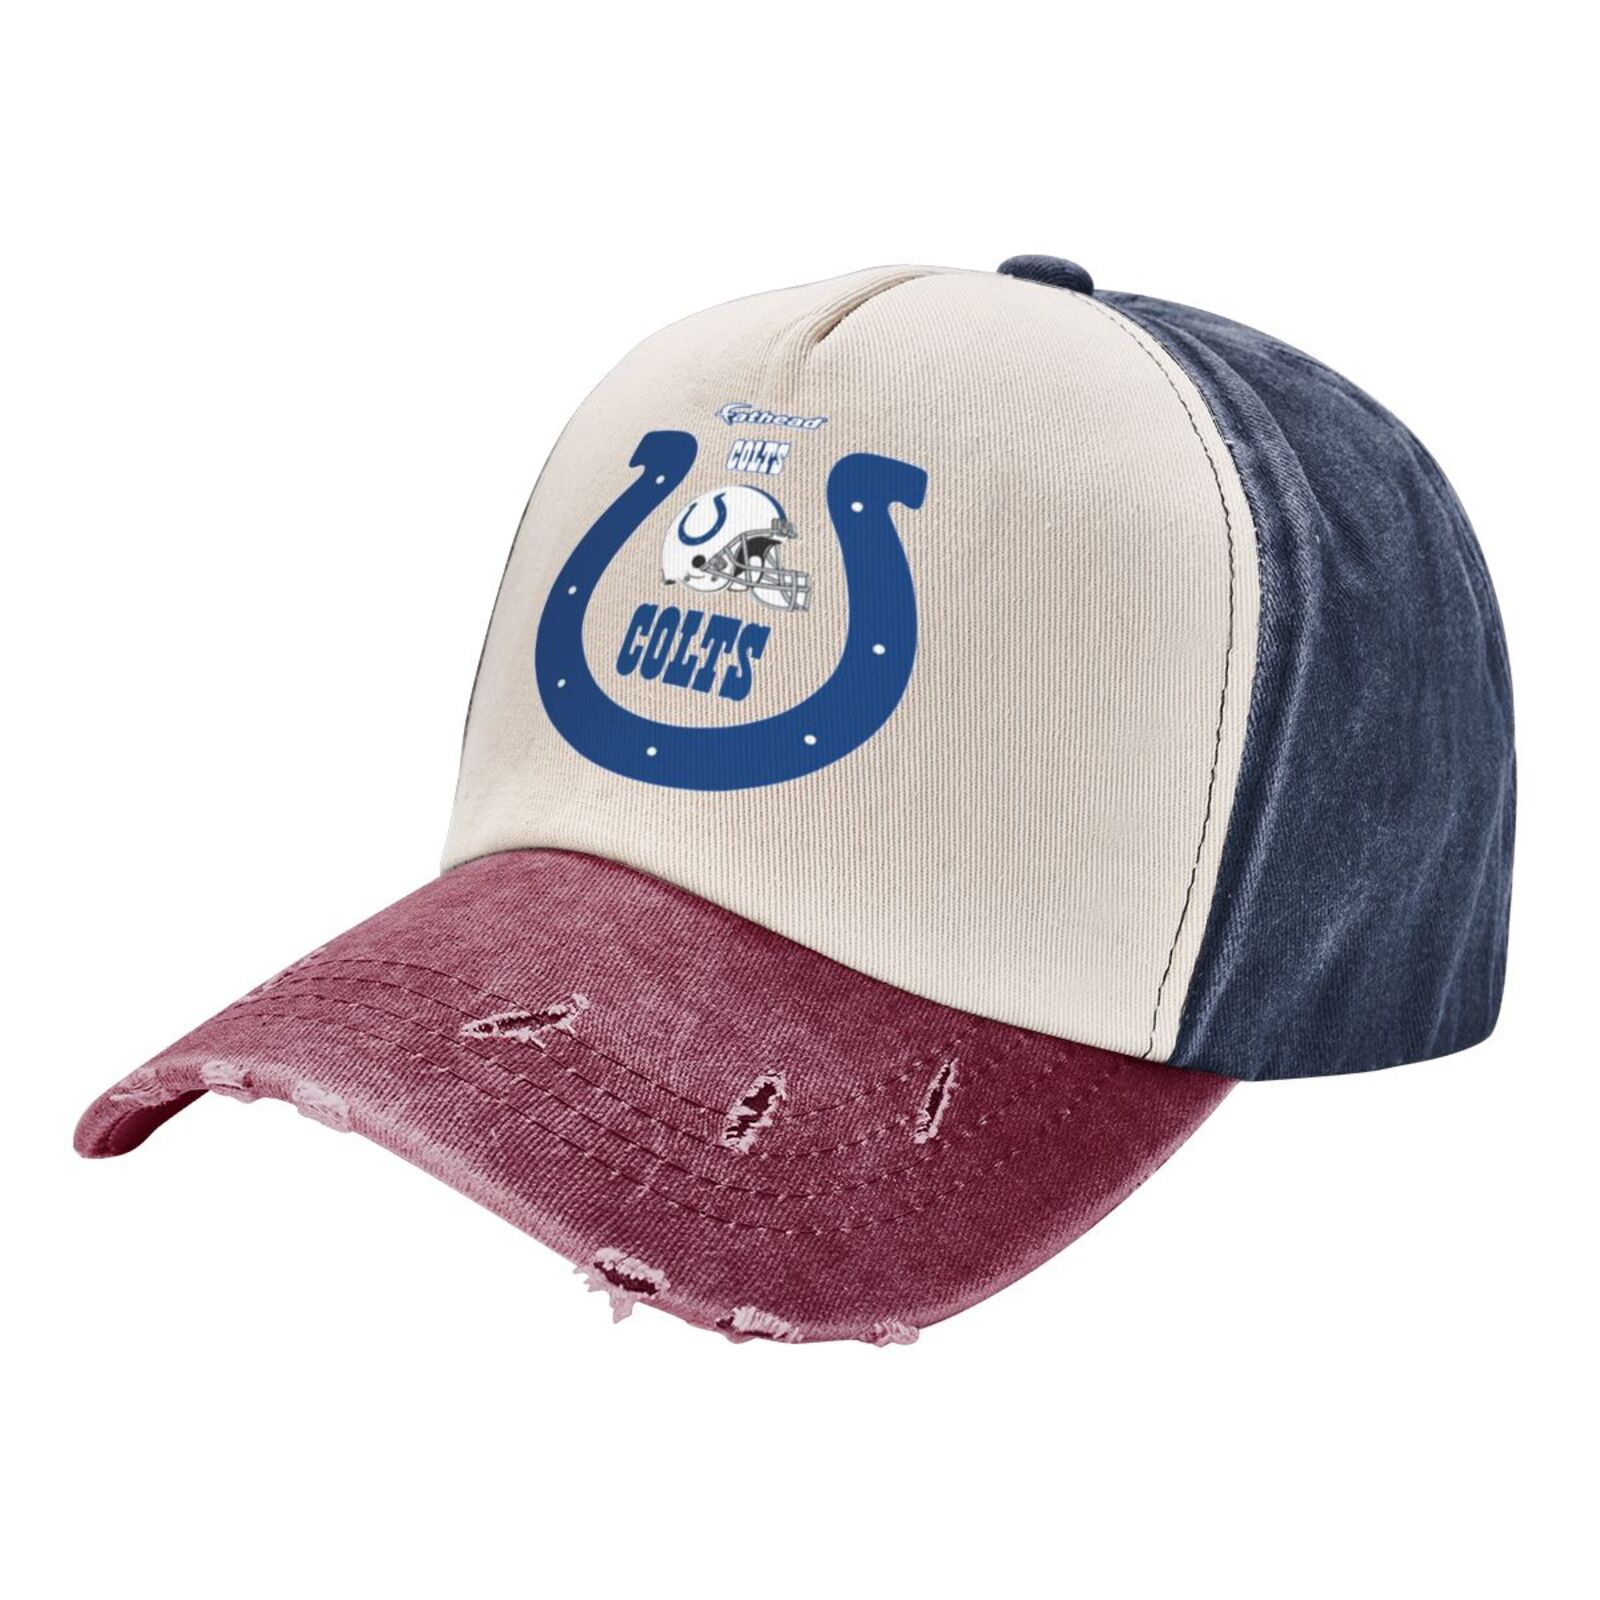 Indianapolis-Colts Baseball Cap Adjustable Hat Sun Shade Peaked Cap ...